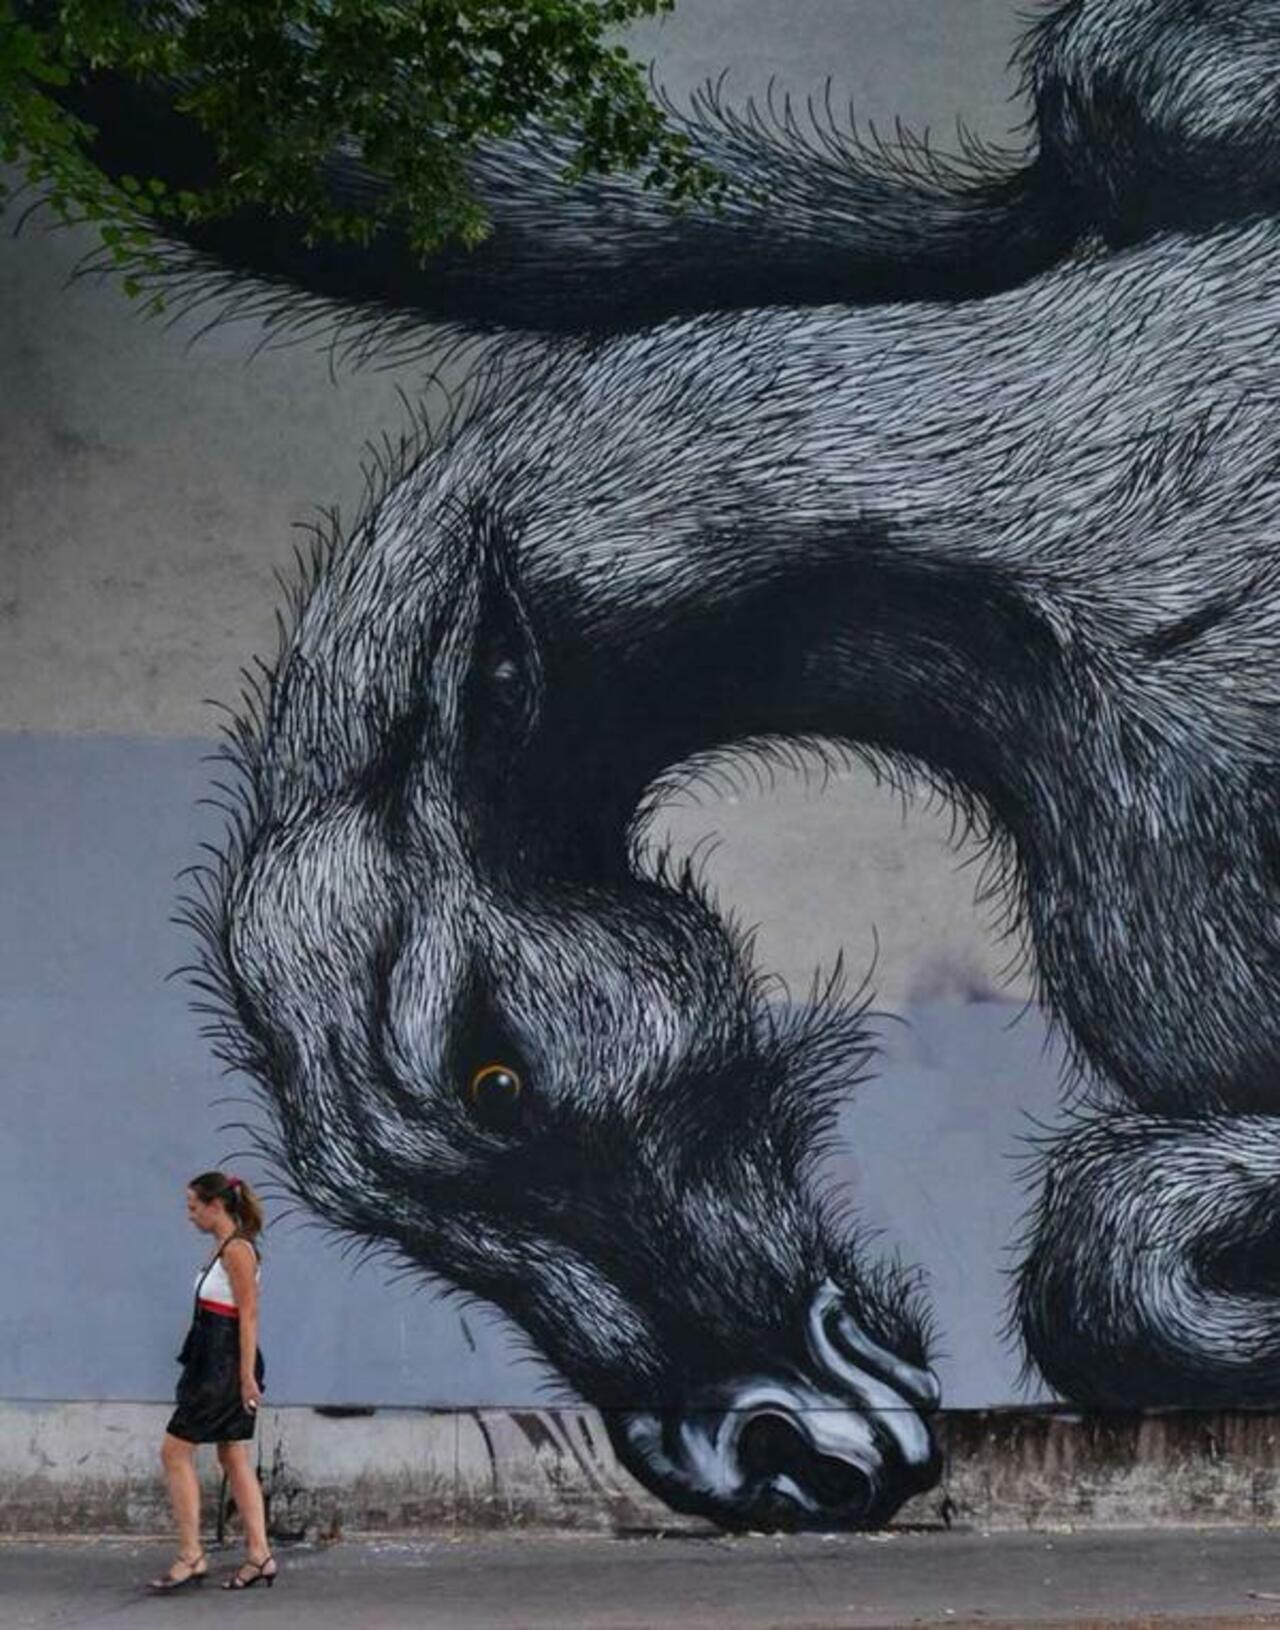 RT @ilusion0ptica: Artista: ROA 
Bélgica
#art #streetart #mural #graffiti http://t.co/XWyWZ0tT4T